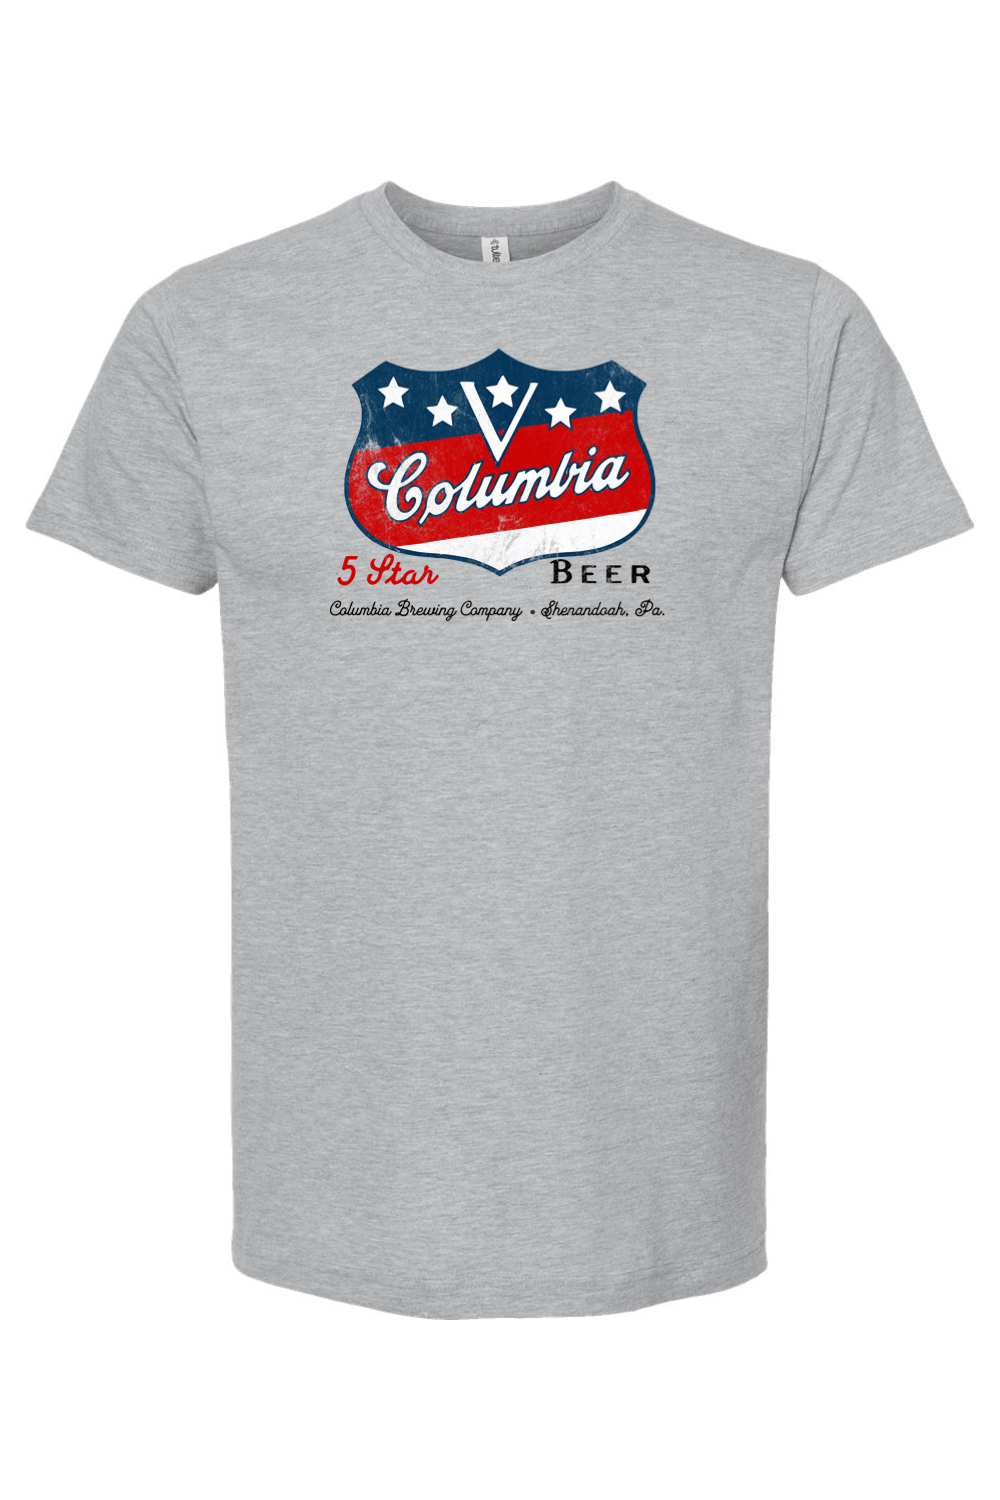 Columbia Beer - Shenandoah, PA - Yinzylvania